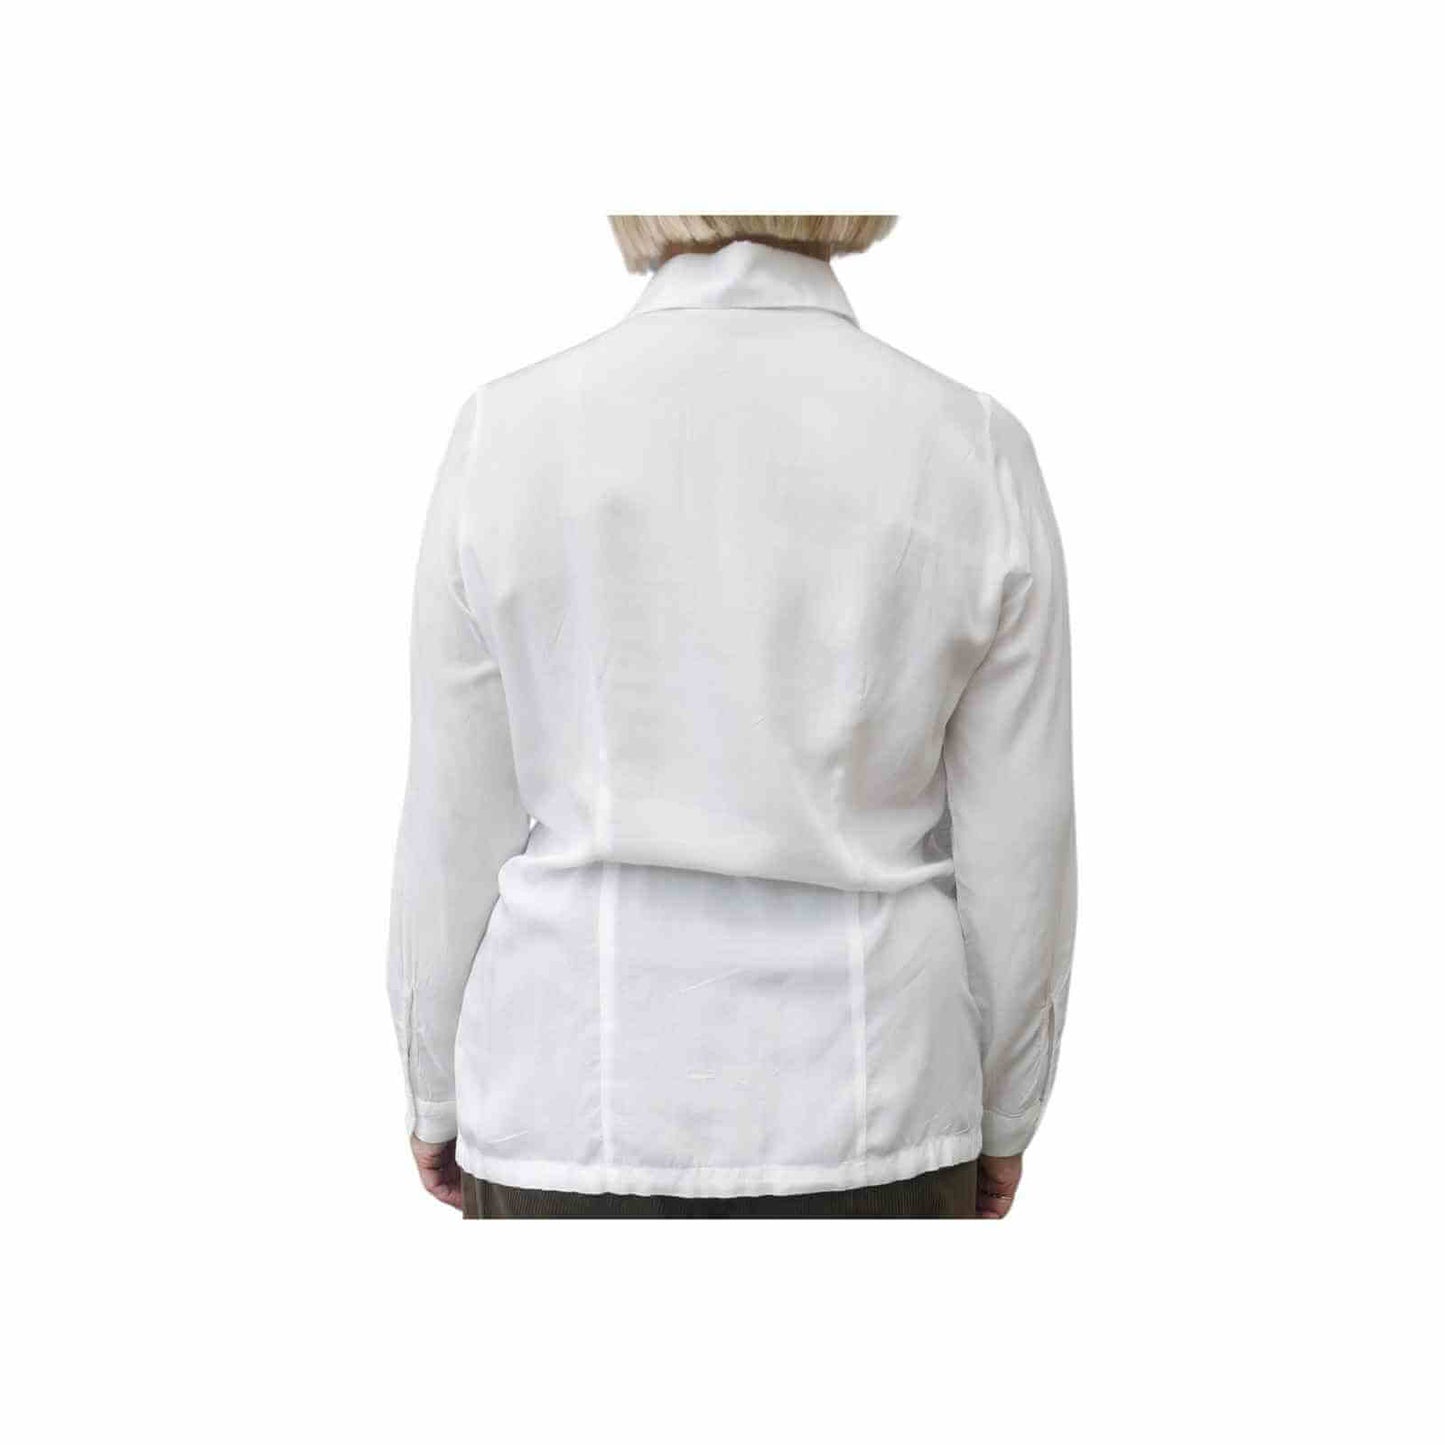 hvid skjorte lavet i 100% økologiske fibre fra lotus blomster